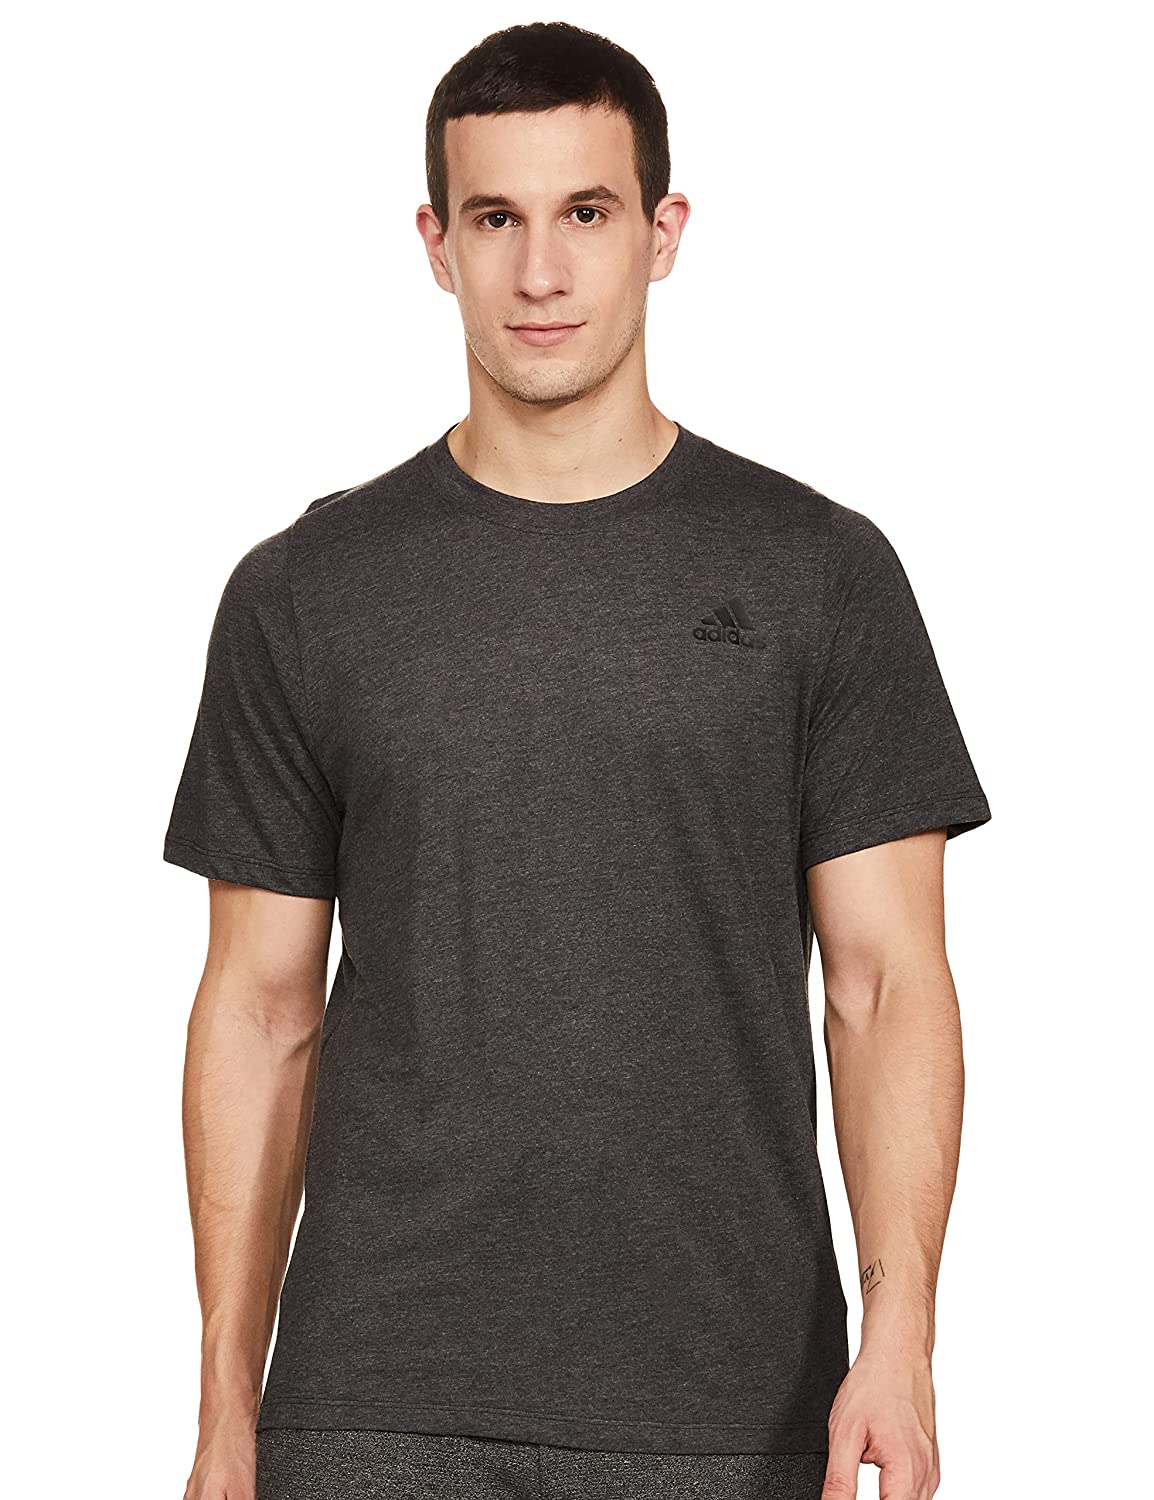 Adidas Men's Regular T-Shirt
